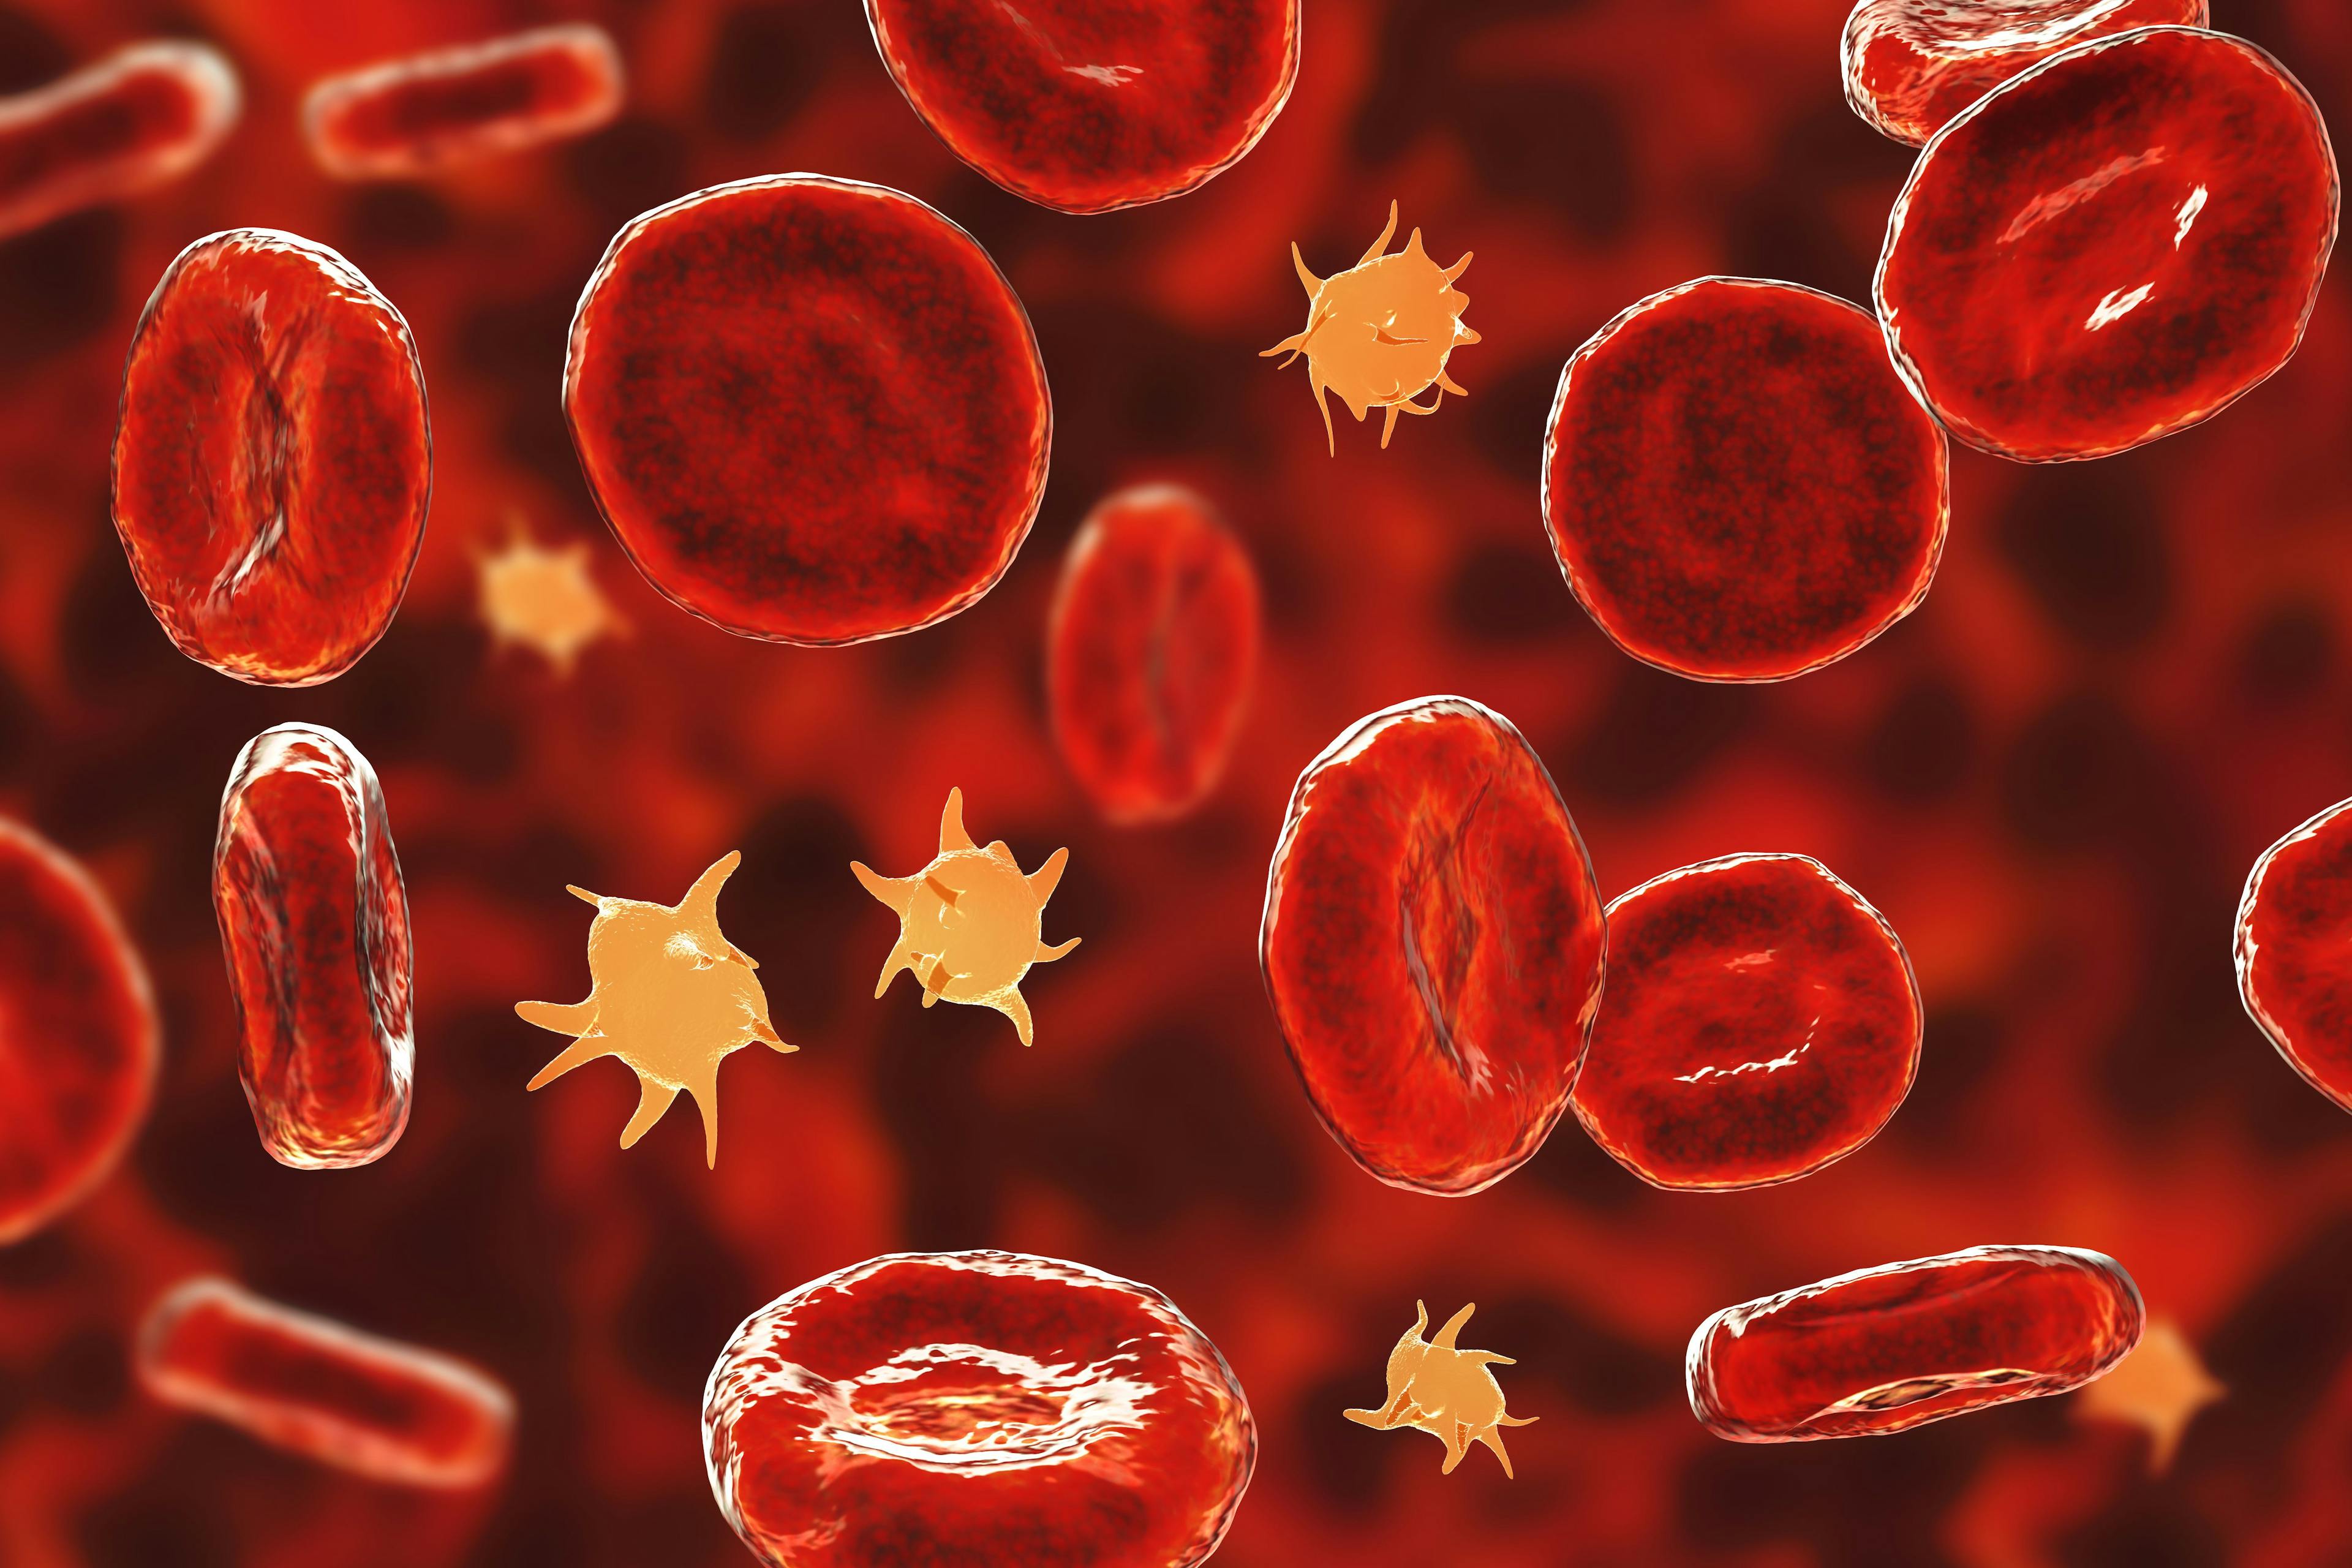 Blood Platelet Concept | image credit: Dr_Microbe - stock.adobe.com